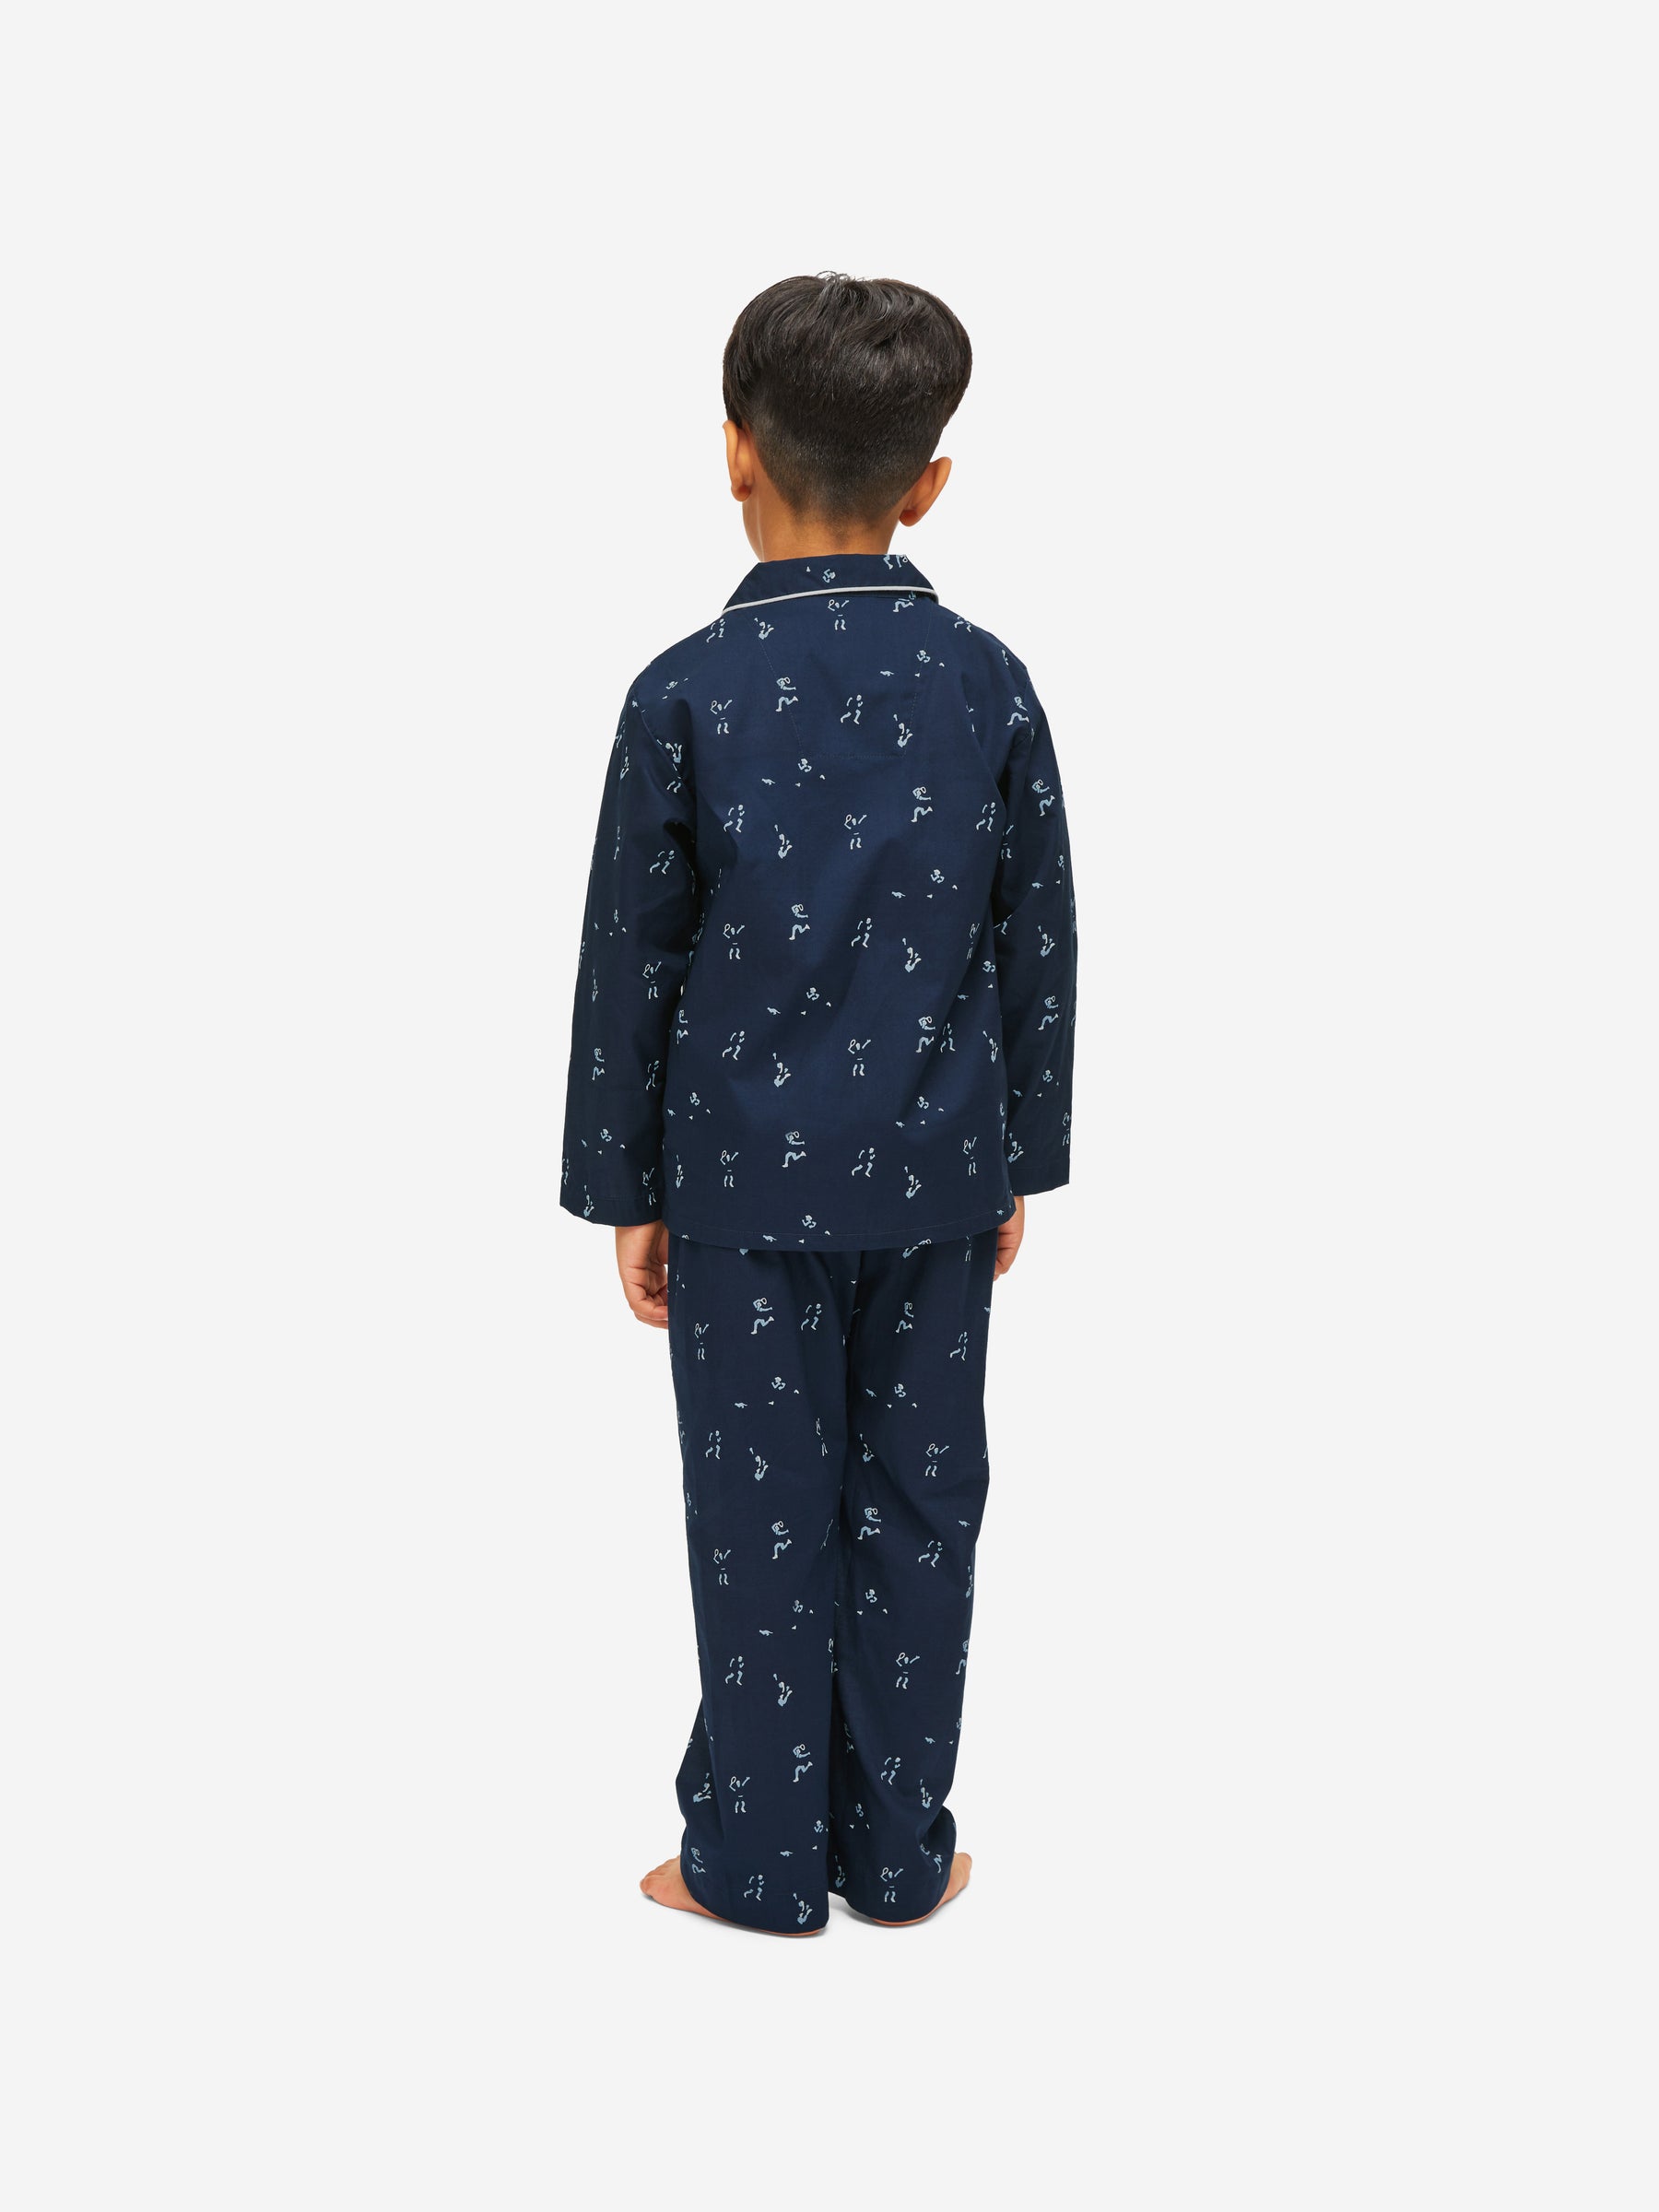 Kids' Pyjamas Nelson 91 Cotton Batiste Navy